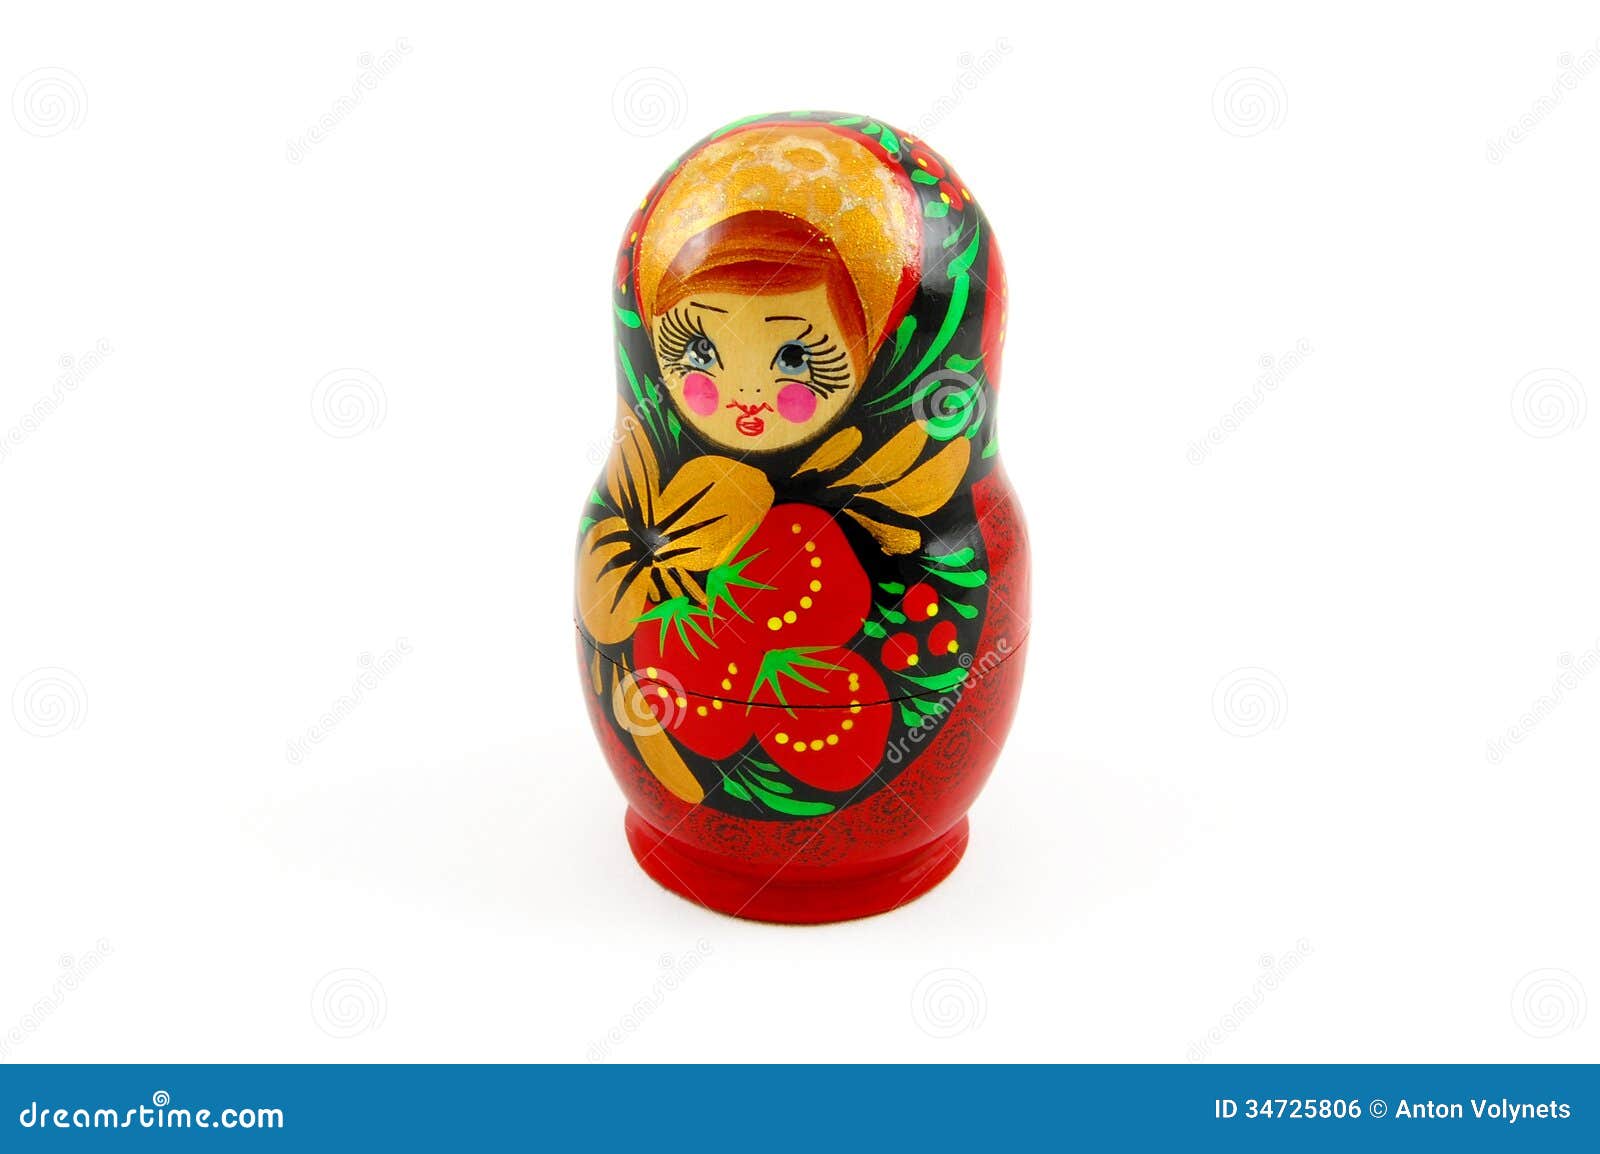 russian doll clip art free - photo #33